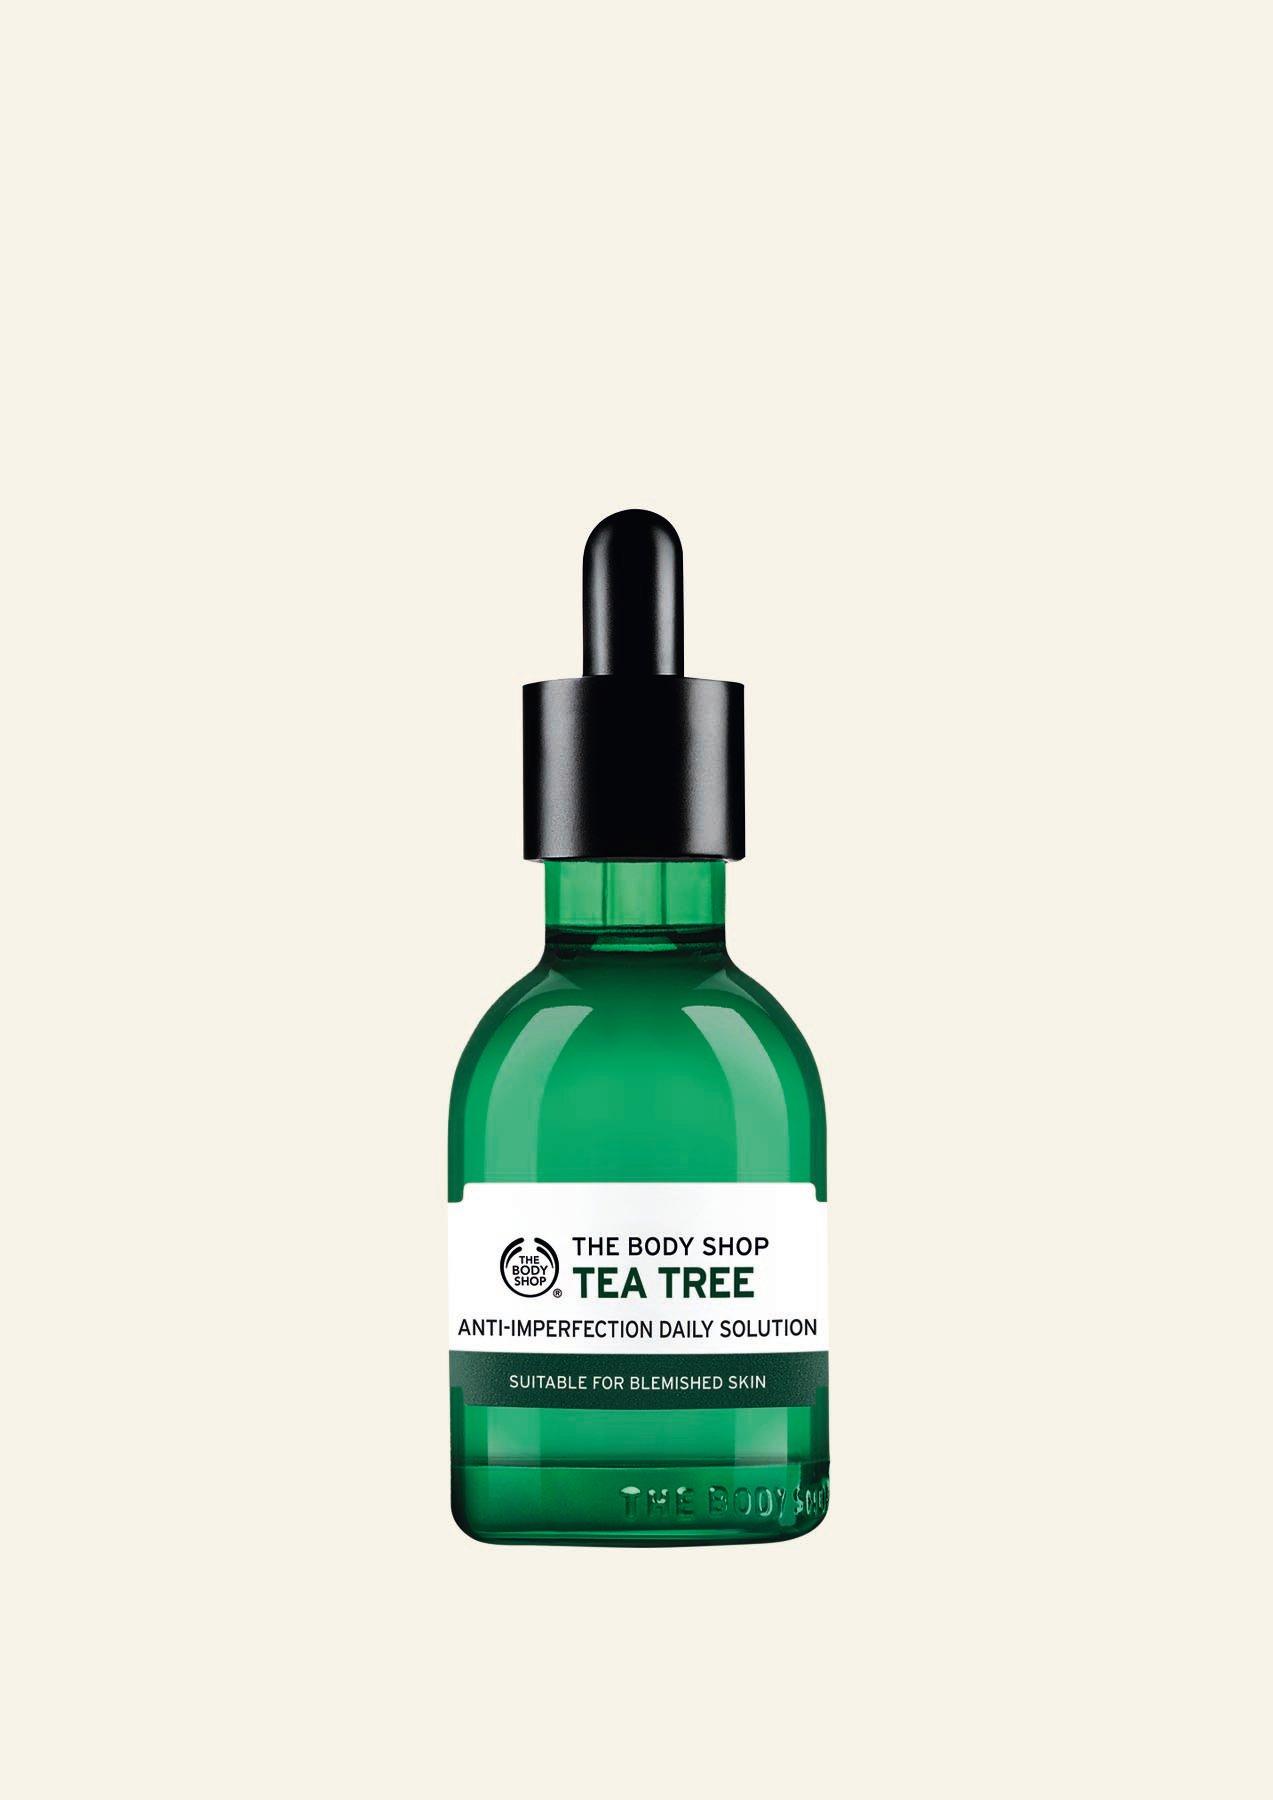 Kilauea Mountain pad klarhed Tea Tree Daily Anti-Imperfection Solution | The Body Shop®